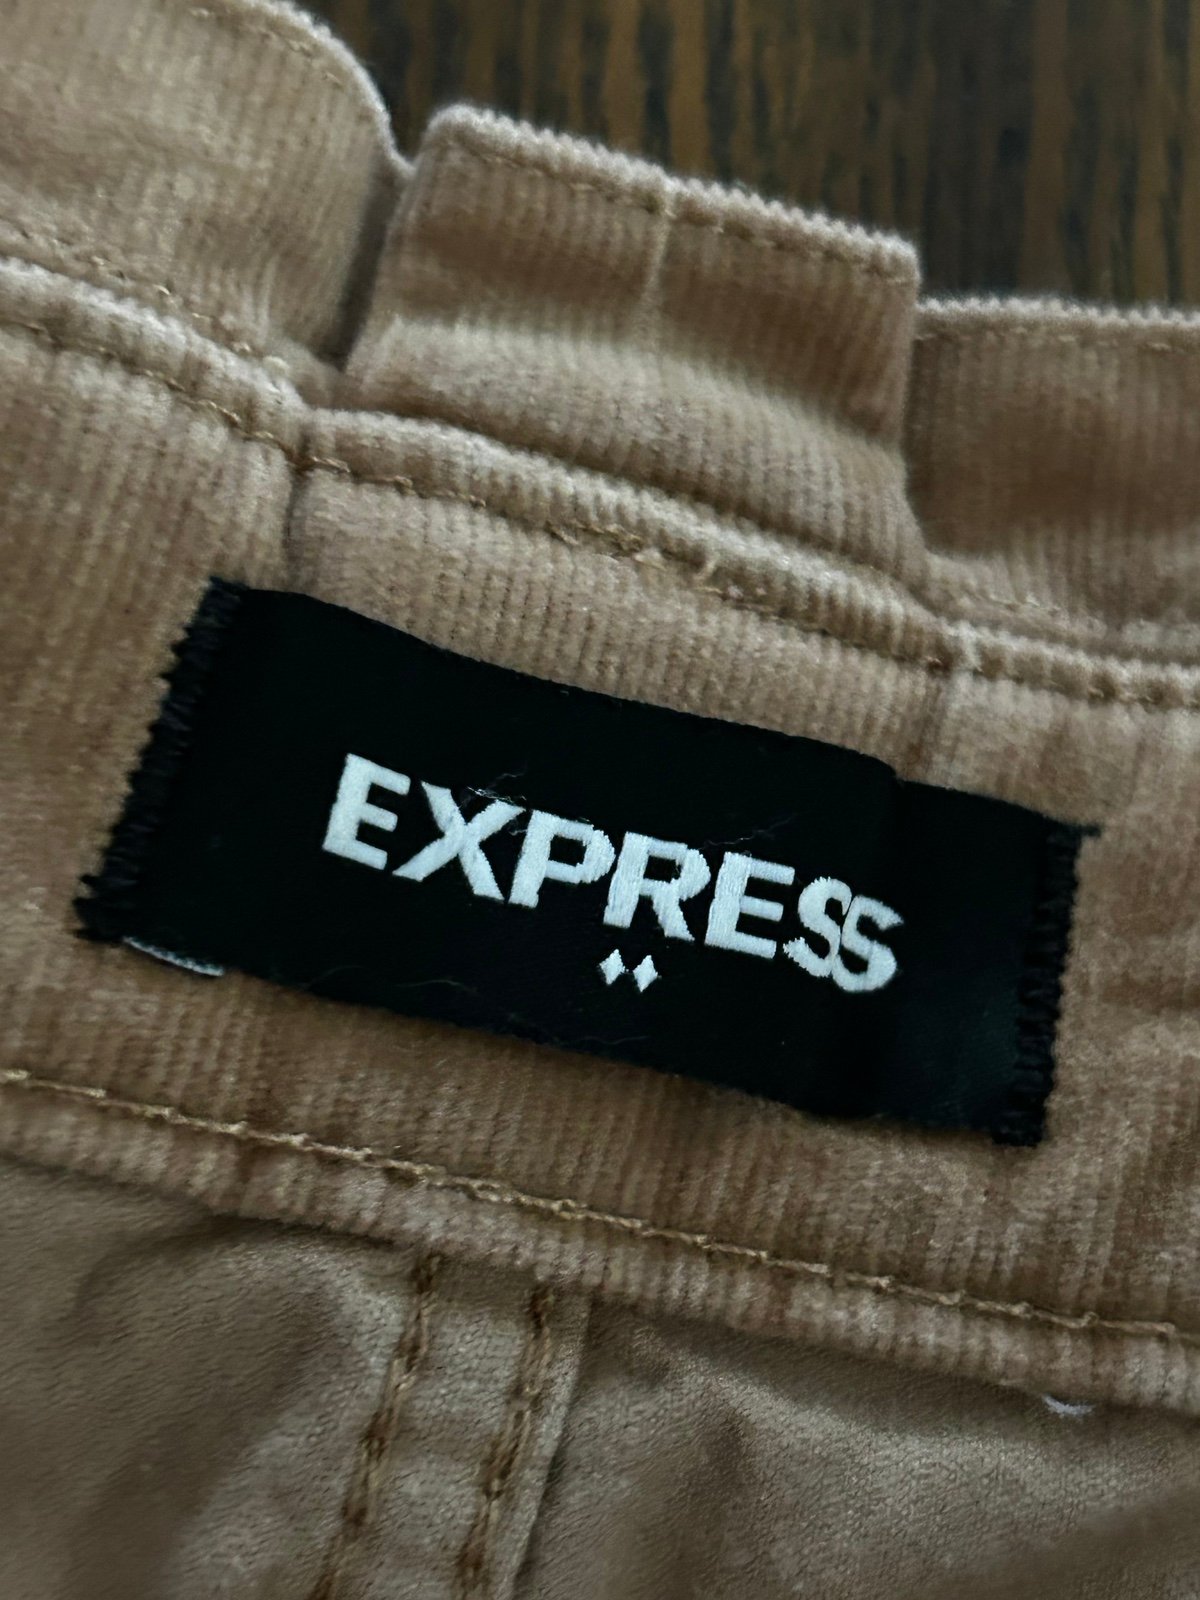 Perfect Express high rise corduroy skirt beige size 14 belt gathered waist EUC pjcAY7PVx US Sale